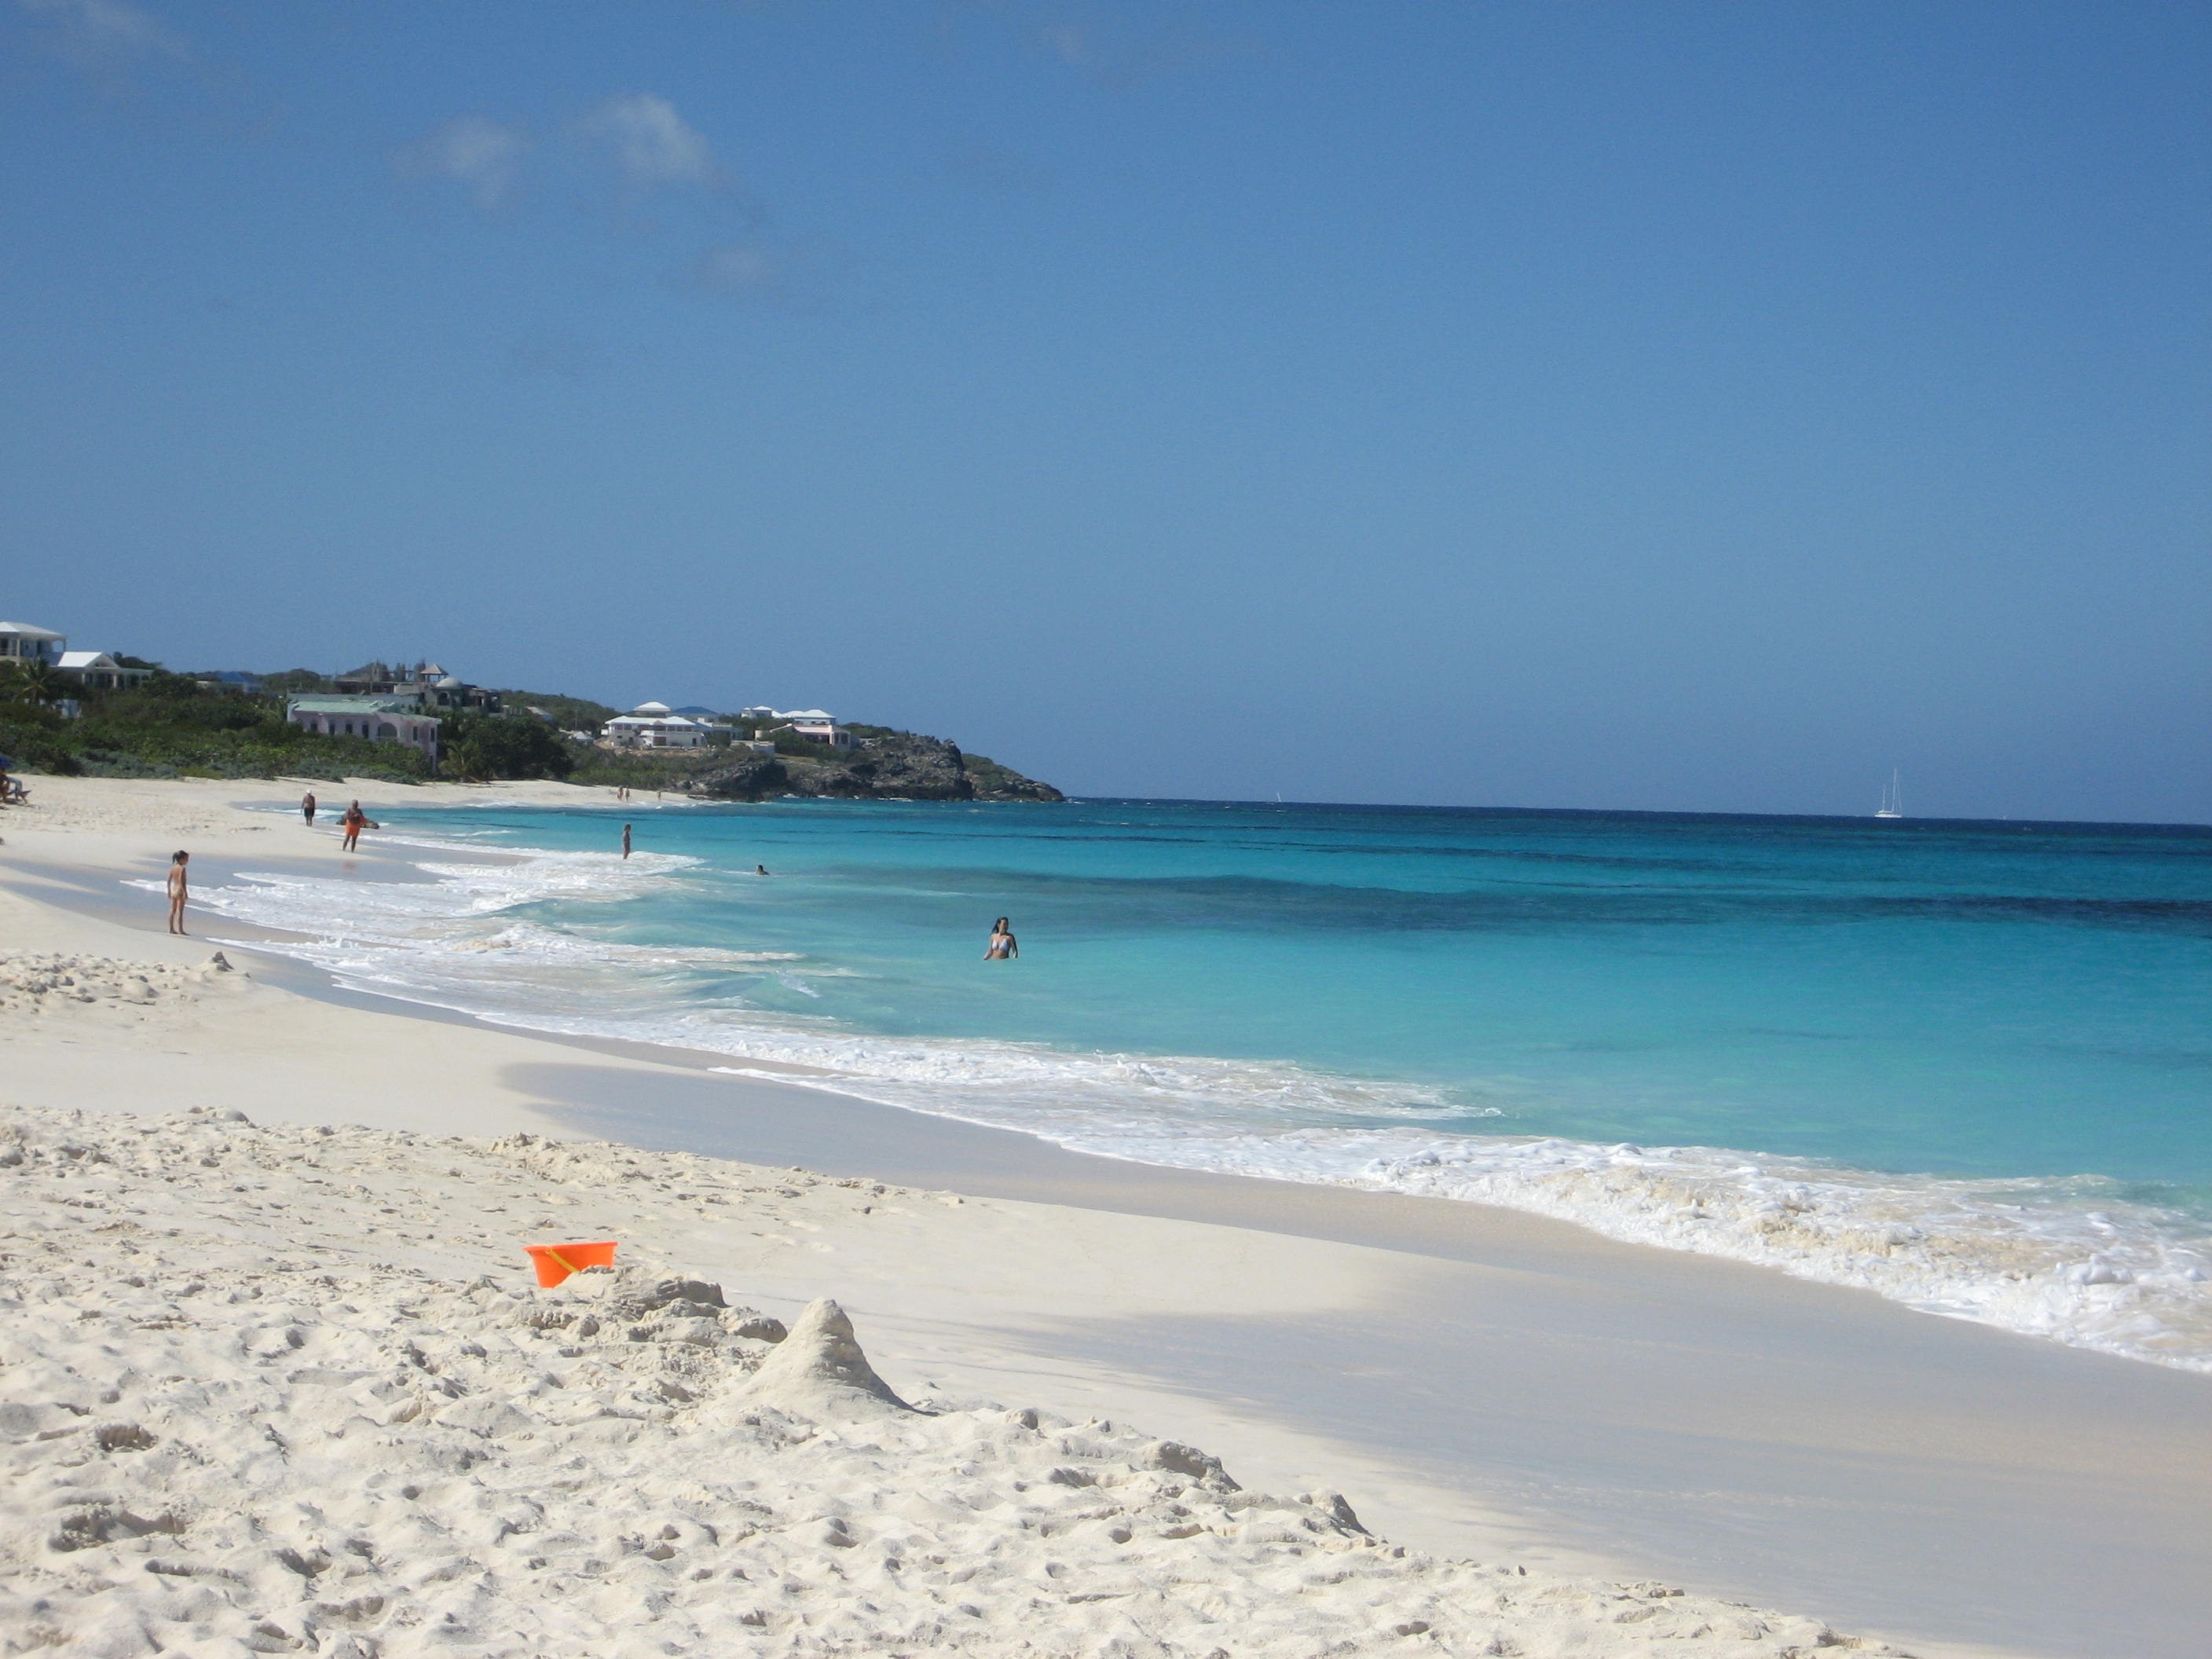 anguilla beach